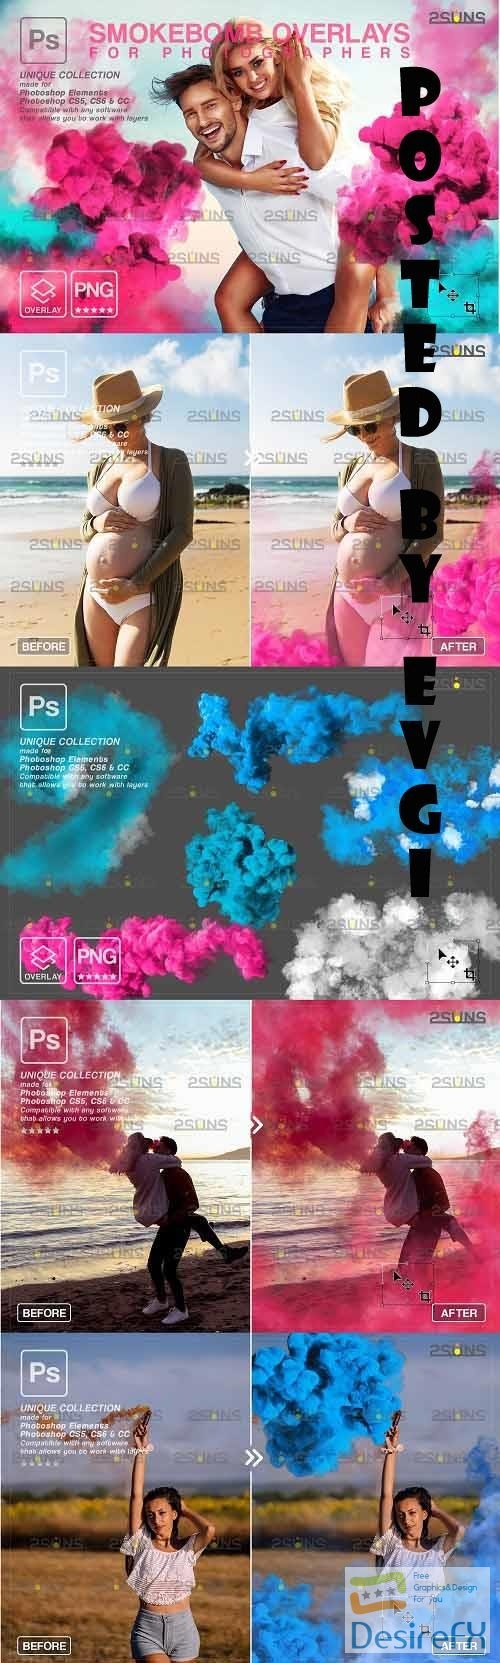 Gender reveal smoke photoshop overlay &amp; Pink smoke bomb - 1612660